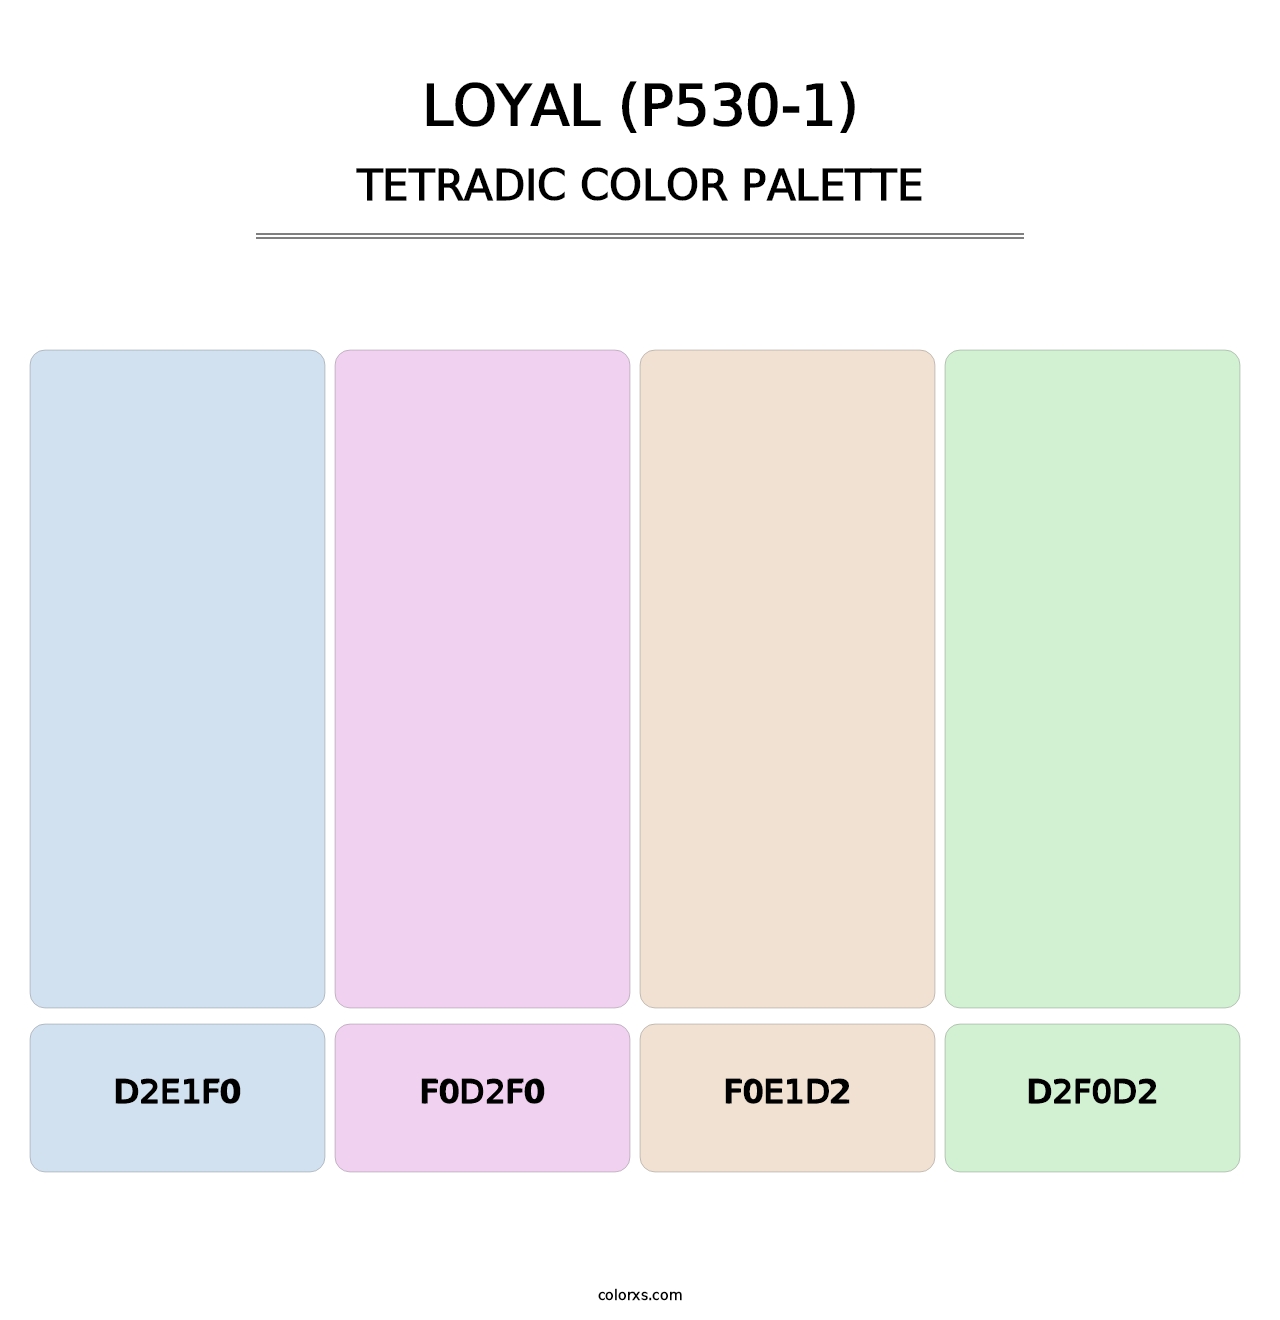 Loyal (P530-1) - Tetradic Color Palette